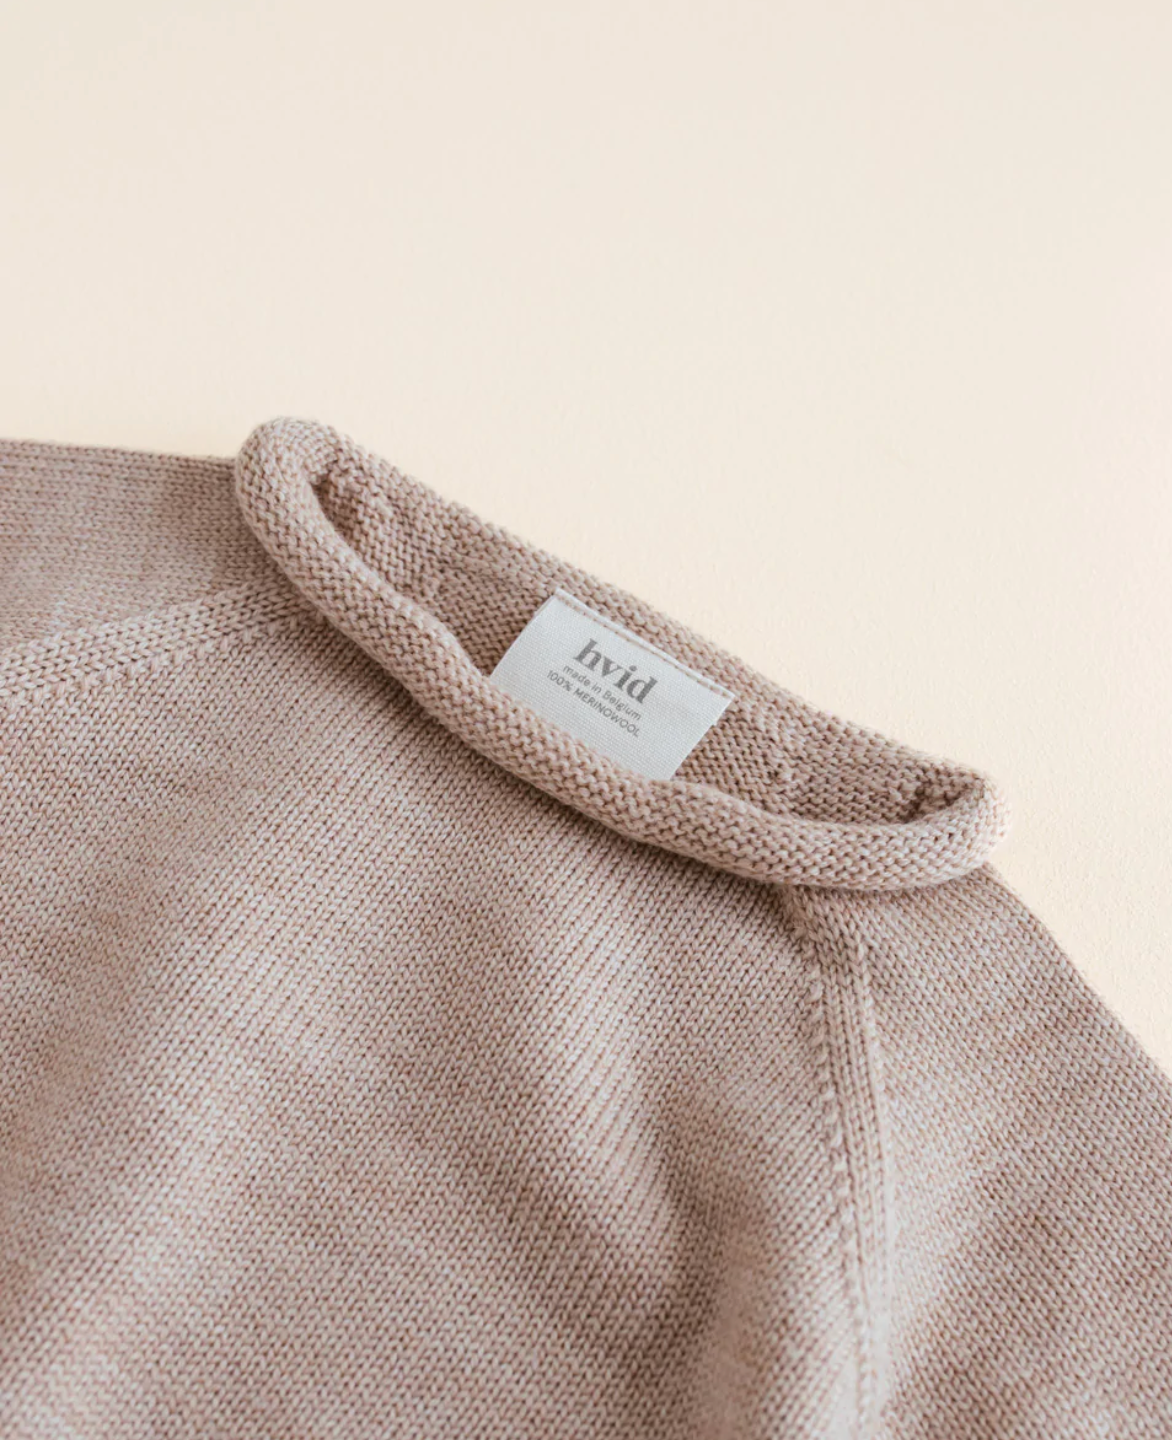 Jersey de lana merino sin costuras georgette